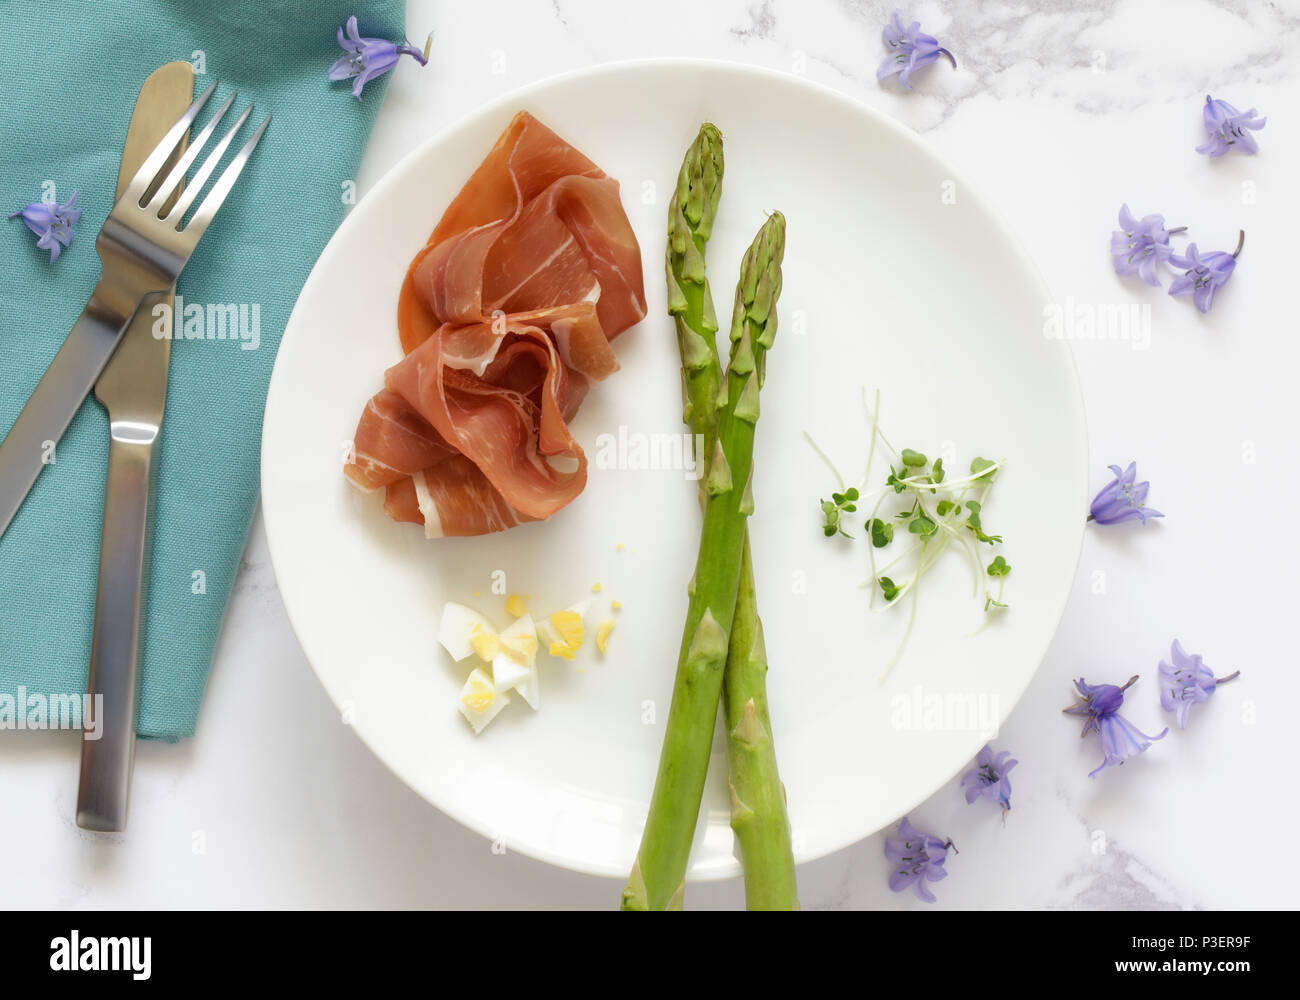 New Season Asparagus, Prosciutto Ham and Eggs, Spring Food Still-life Stock Photo